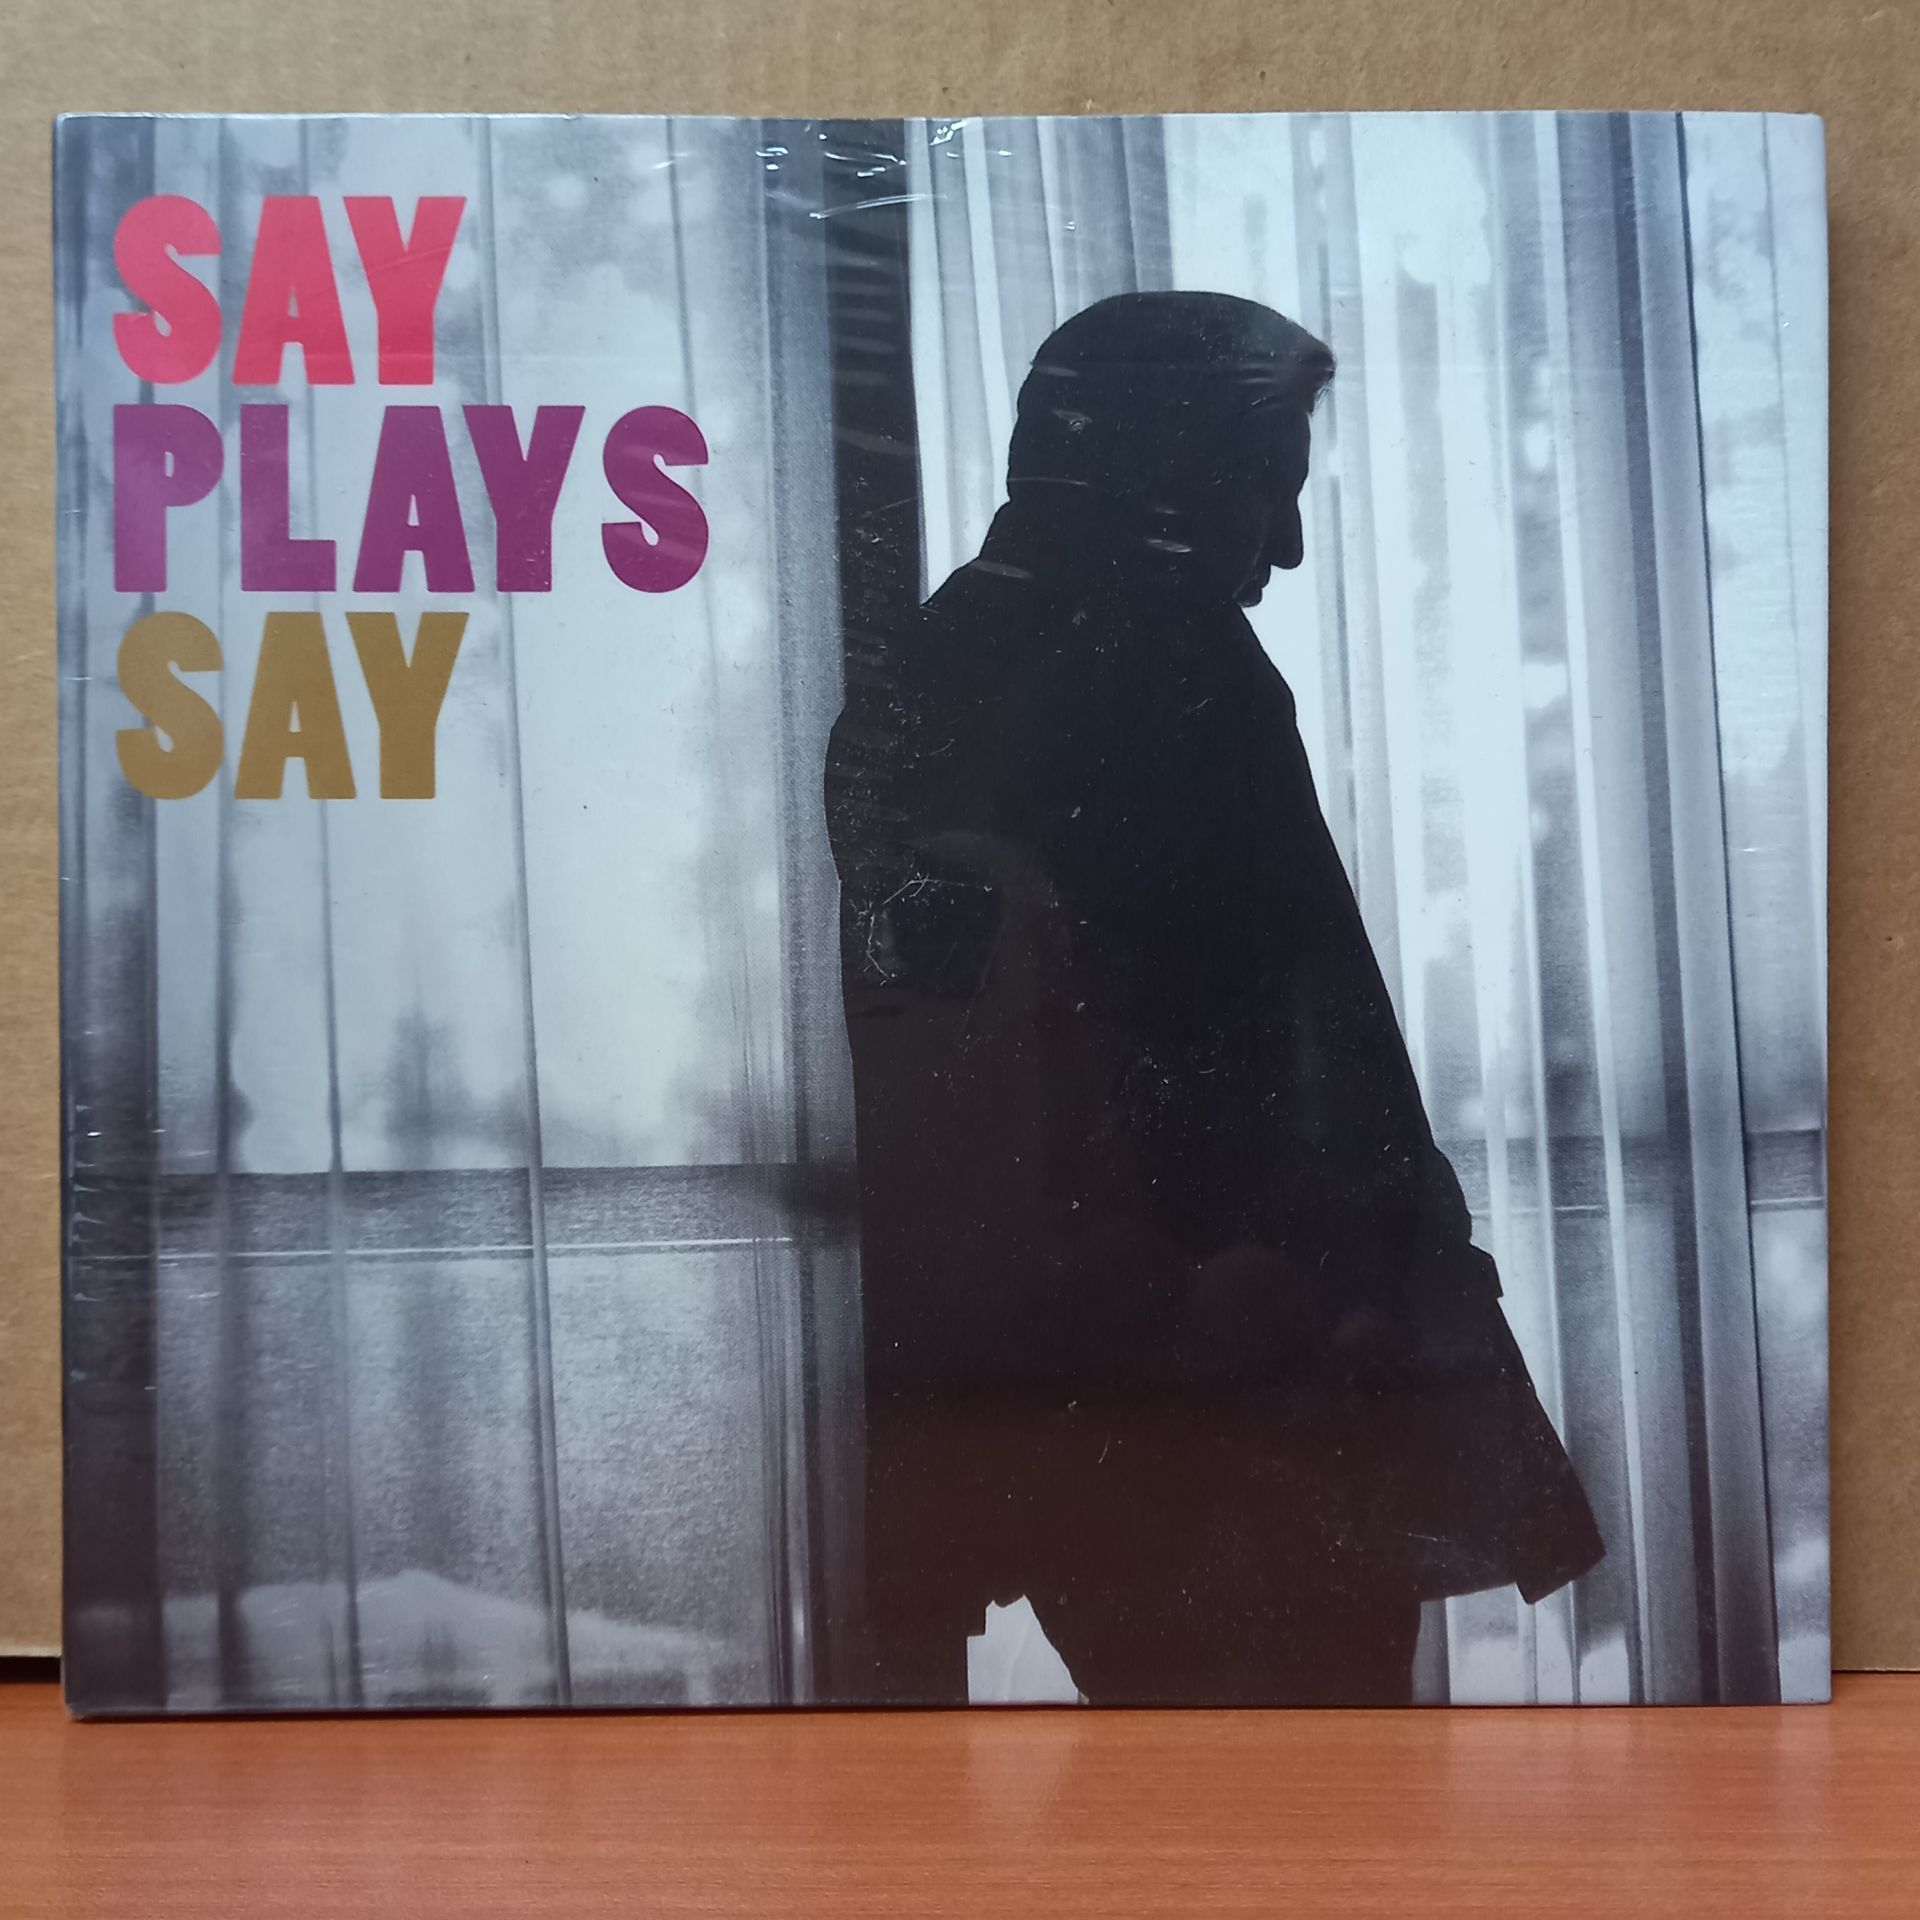 FAZIL SAY - SAY PLAYS SAY (2014) - CD SIFIR